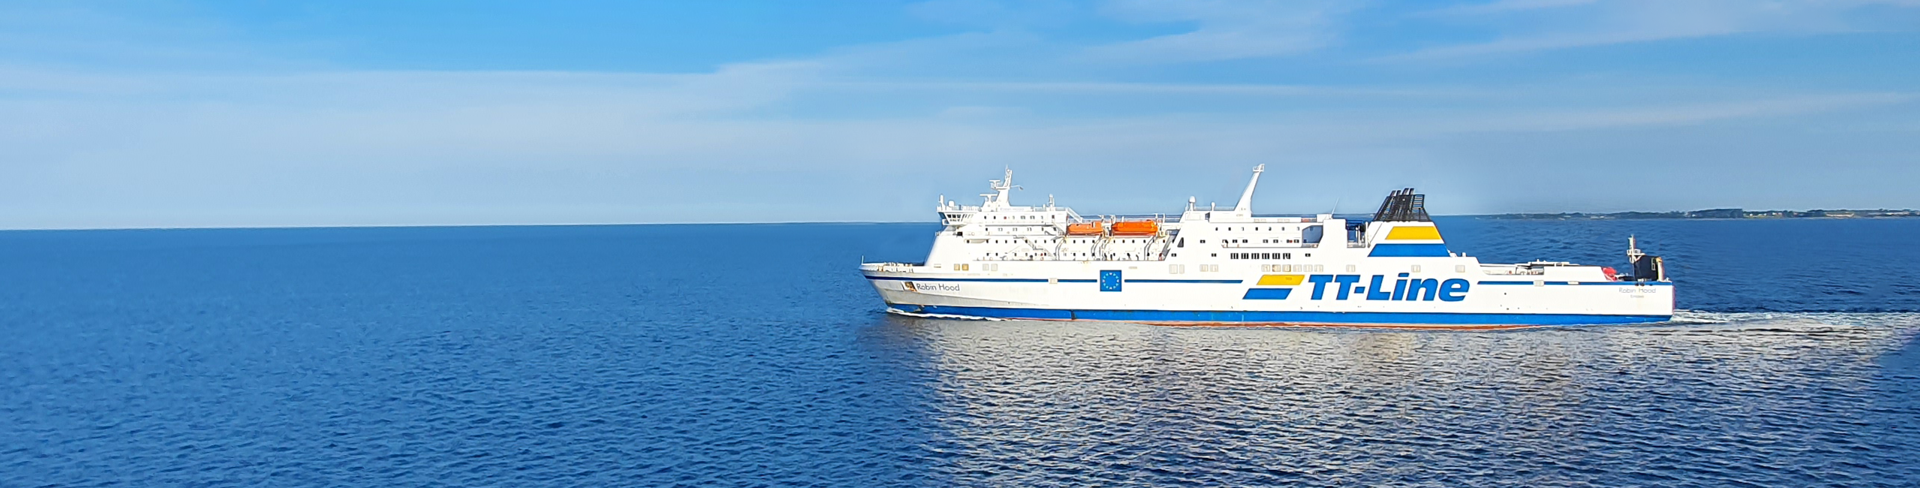 Dienstregeling-Trelleborg-Świnoujście-TT-Line-veerboot-Robin-Hood